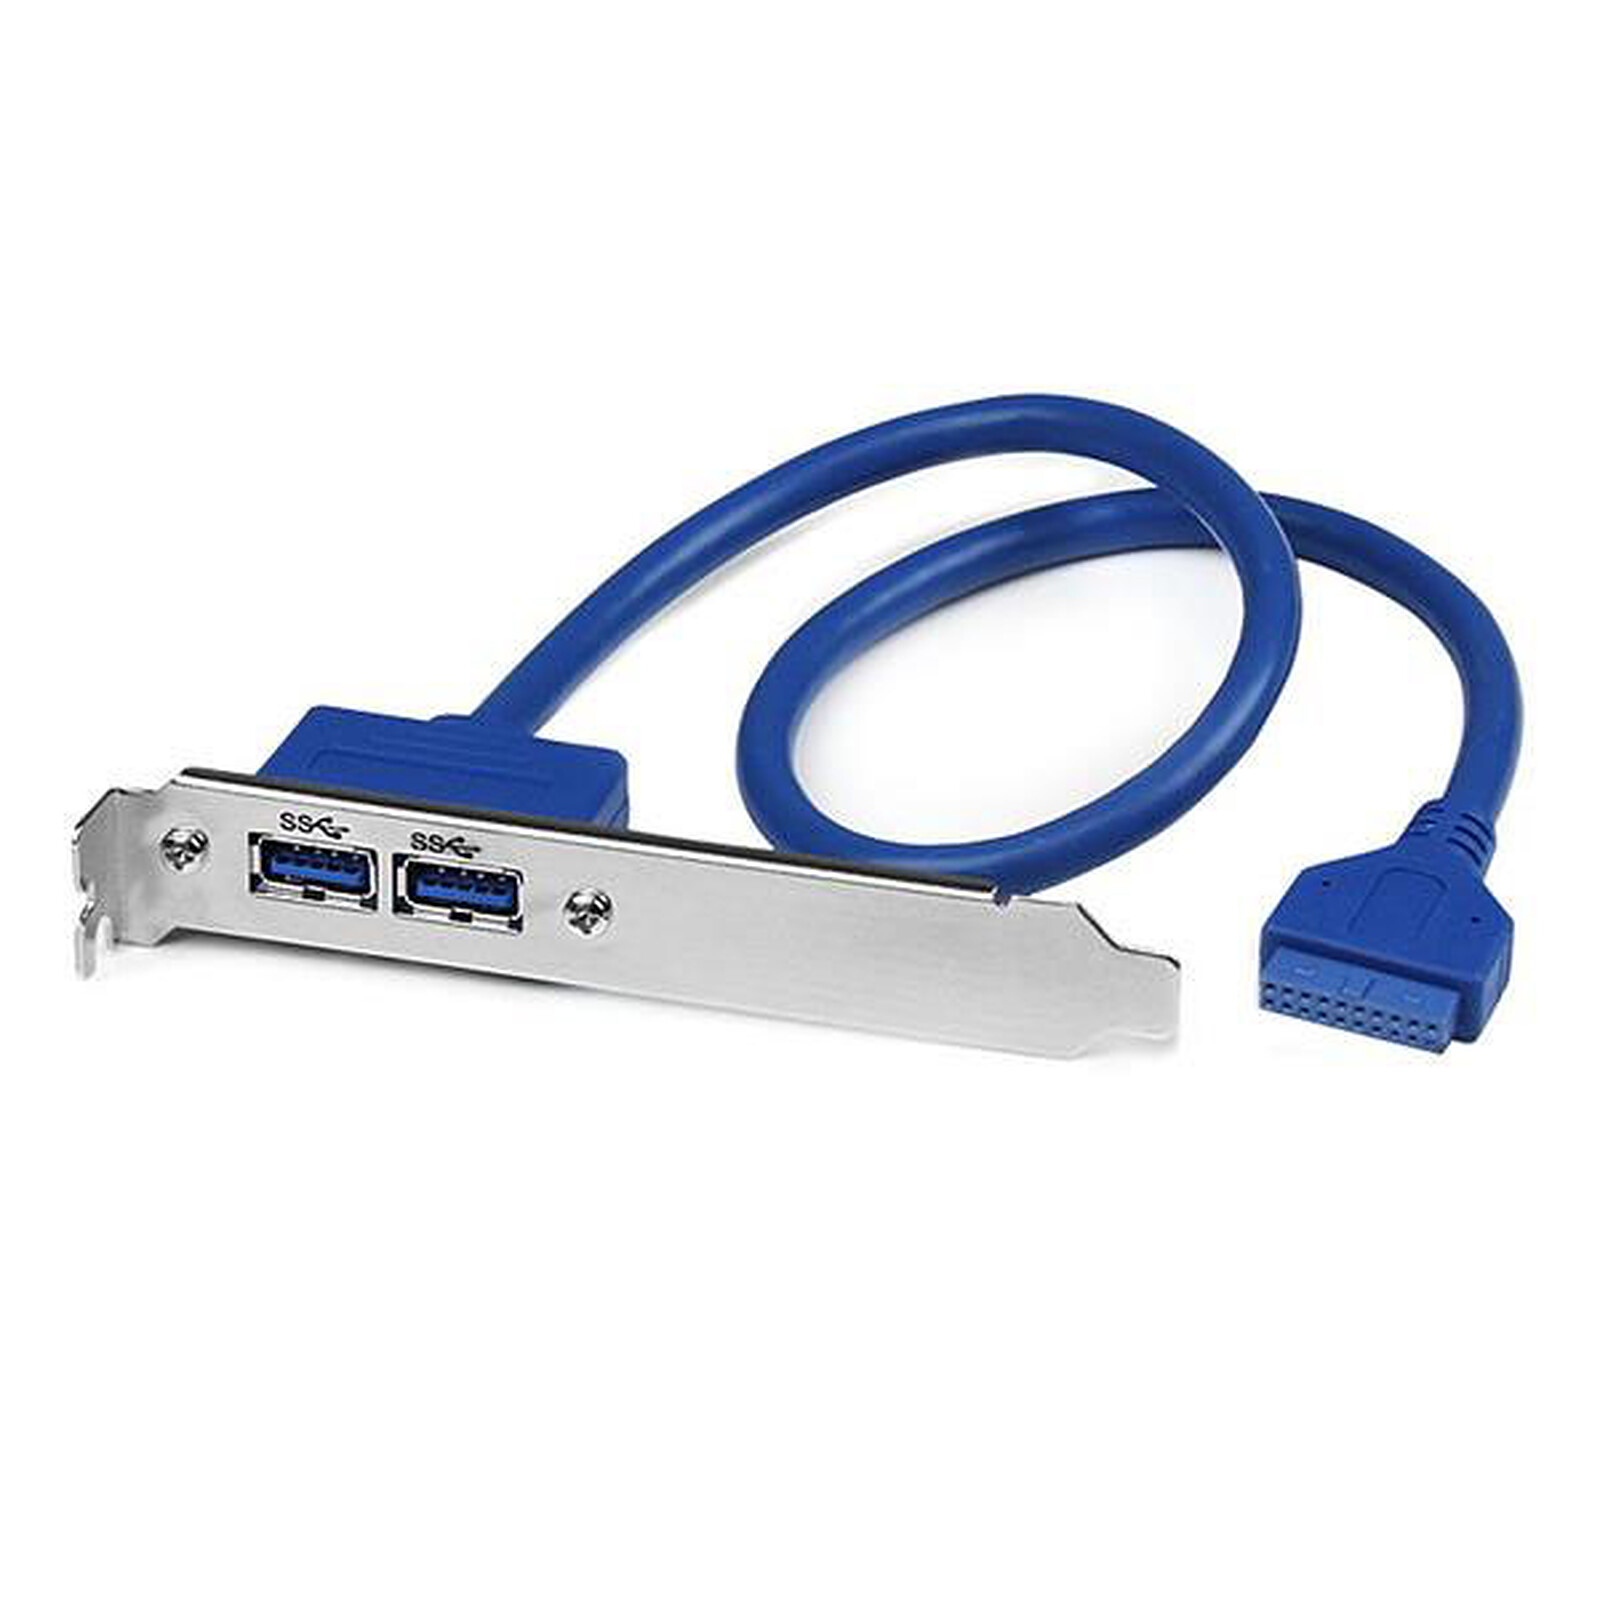 Bloqueur de port USB avec 1 clé et 20 ports USB 2.0/3.0 amovibles